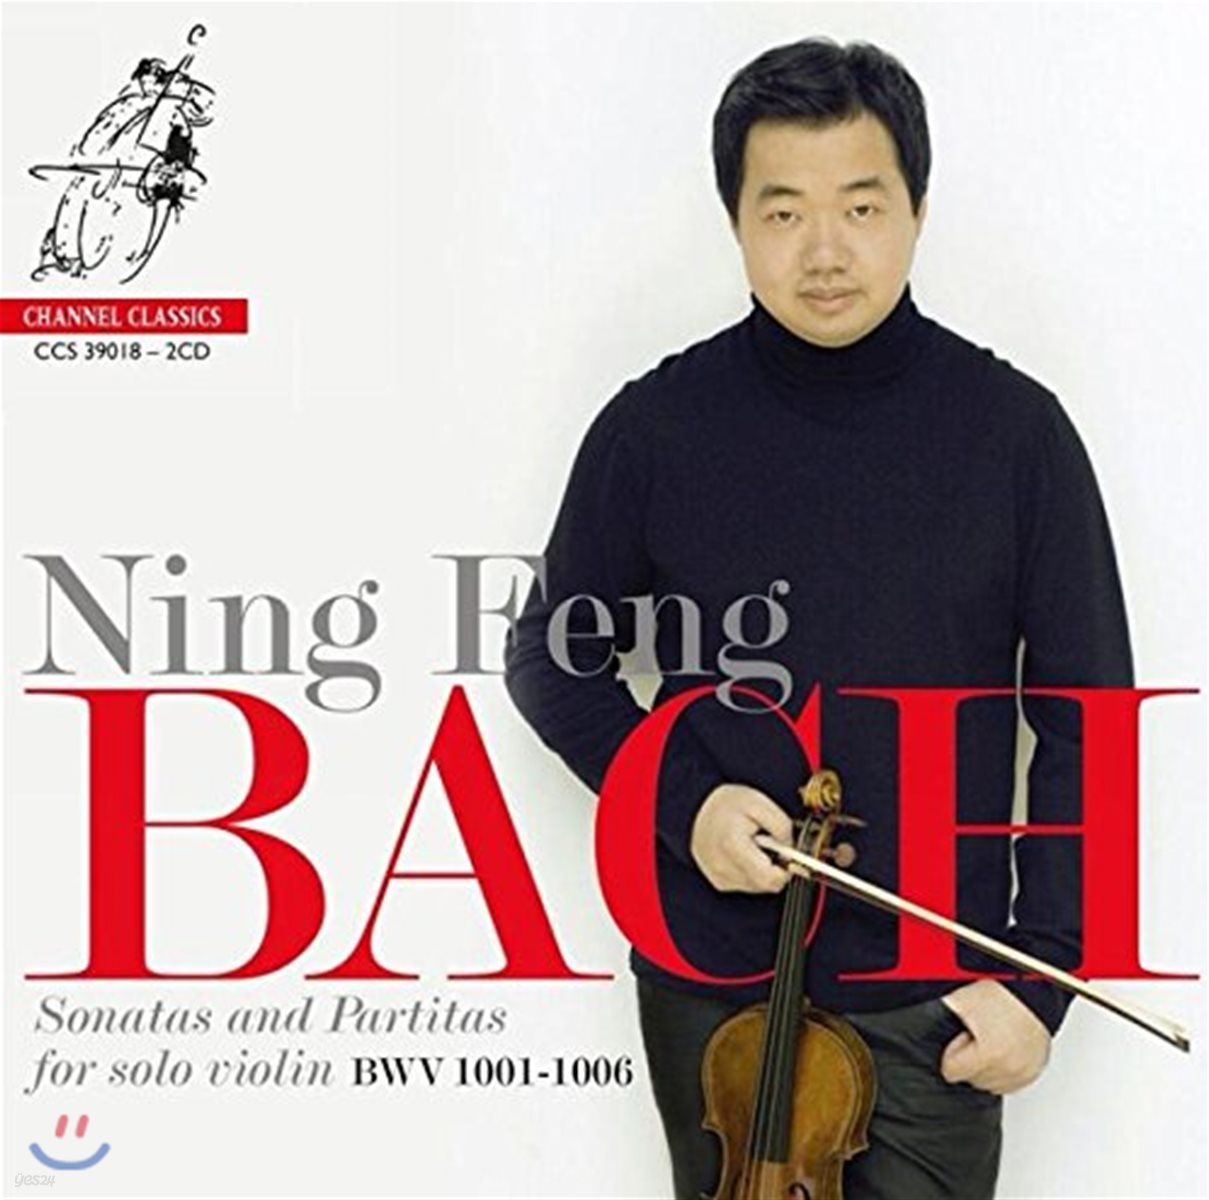 Ning Feng 바흐: 무반주 바이올린 소나타 &amp; 파르티타 전곡집 - 닝펑 